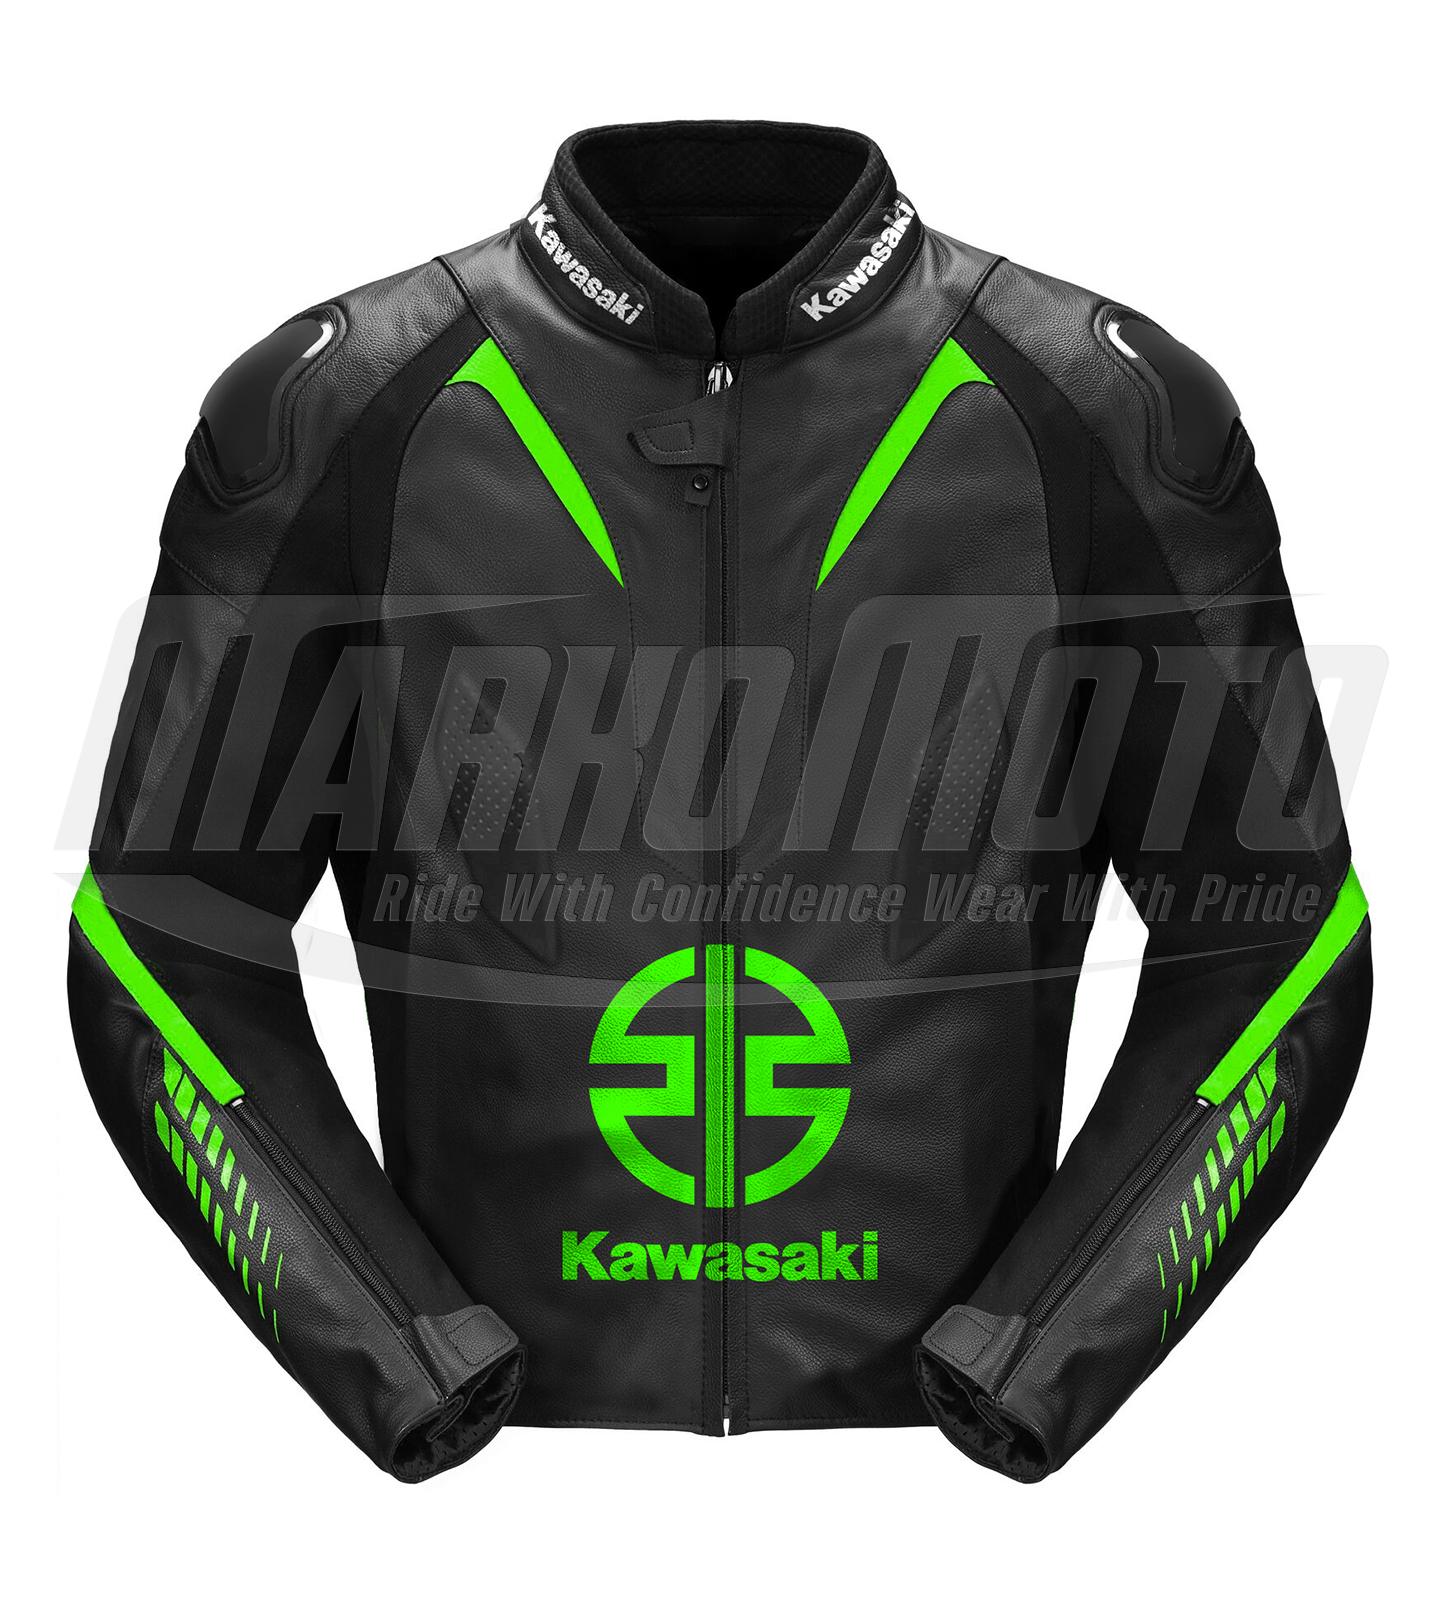 Kawasaki Ninja ZX-10R cowhide and kangaroo leather racing jacket for men & women